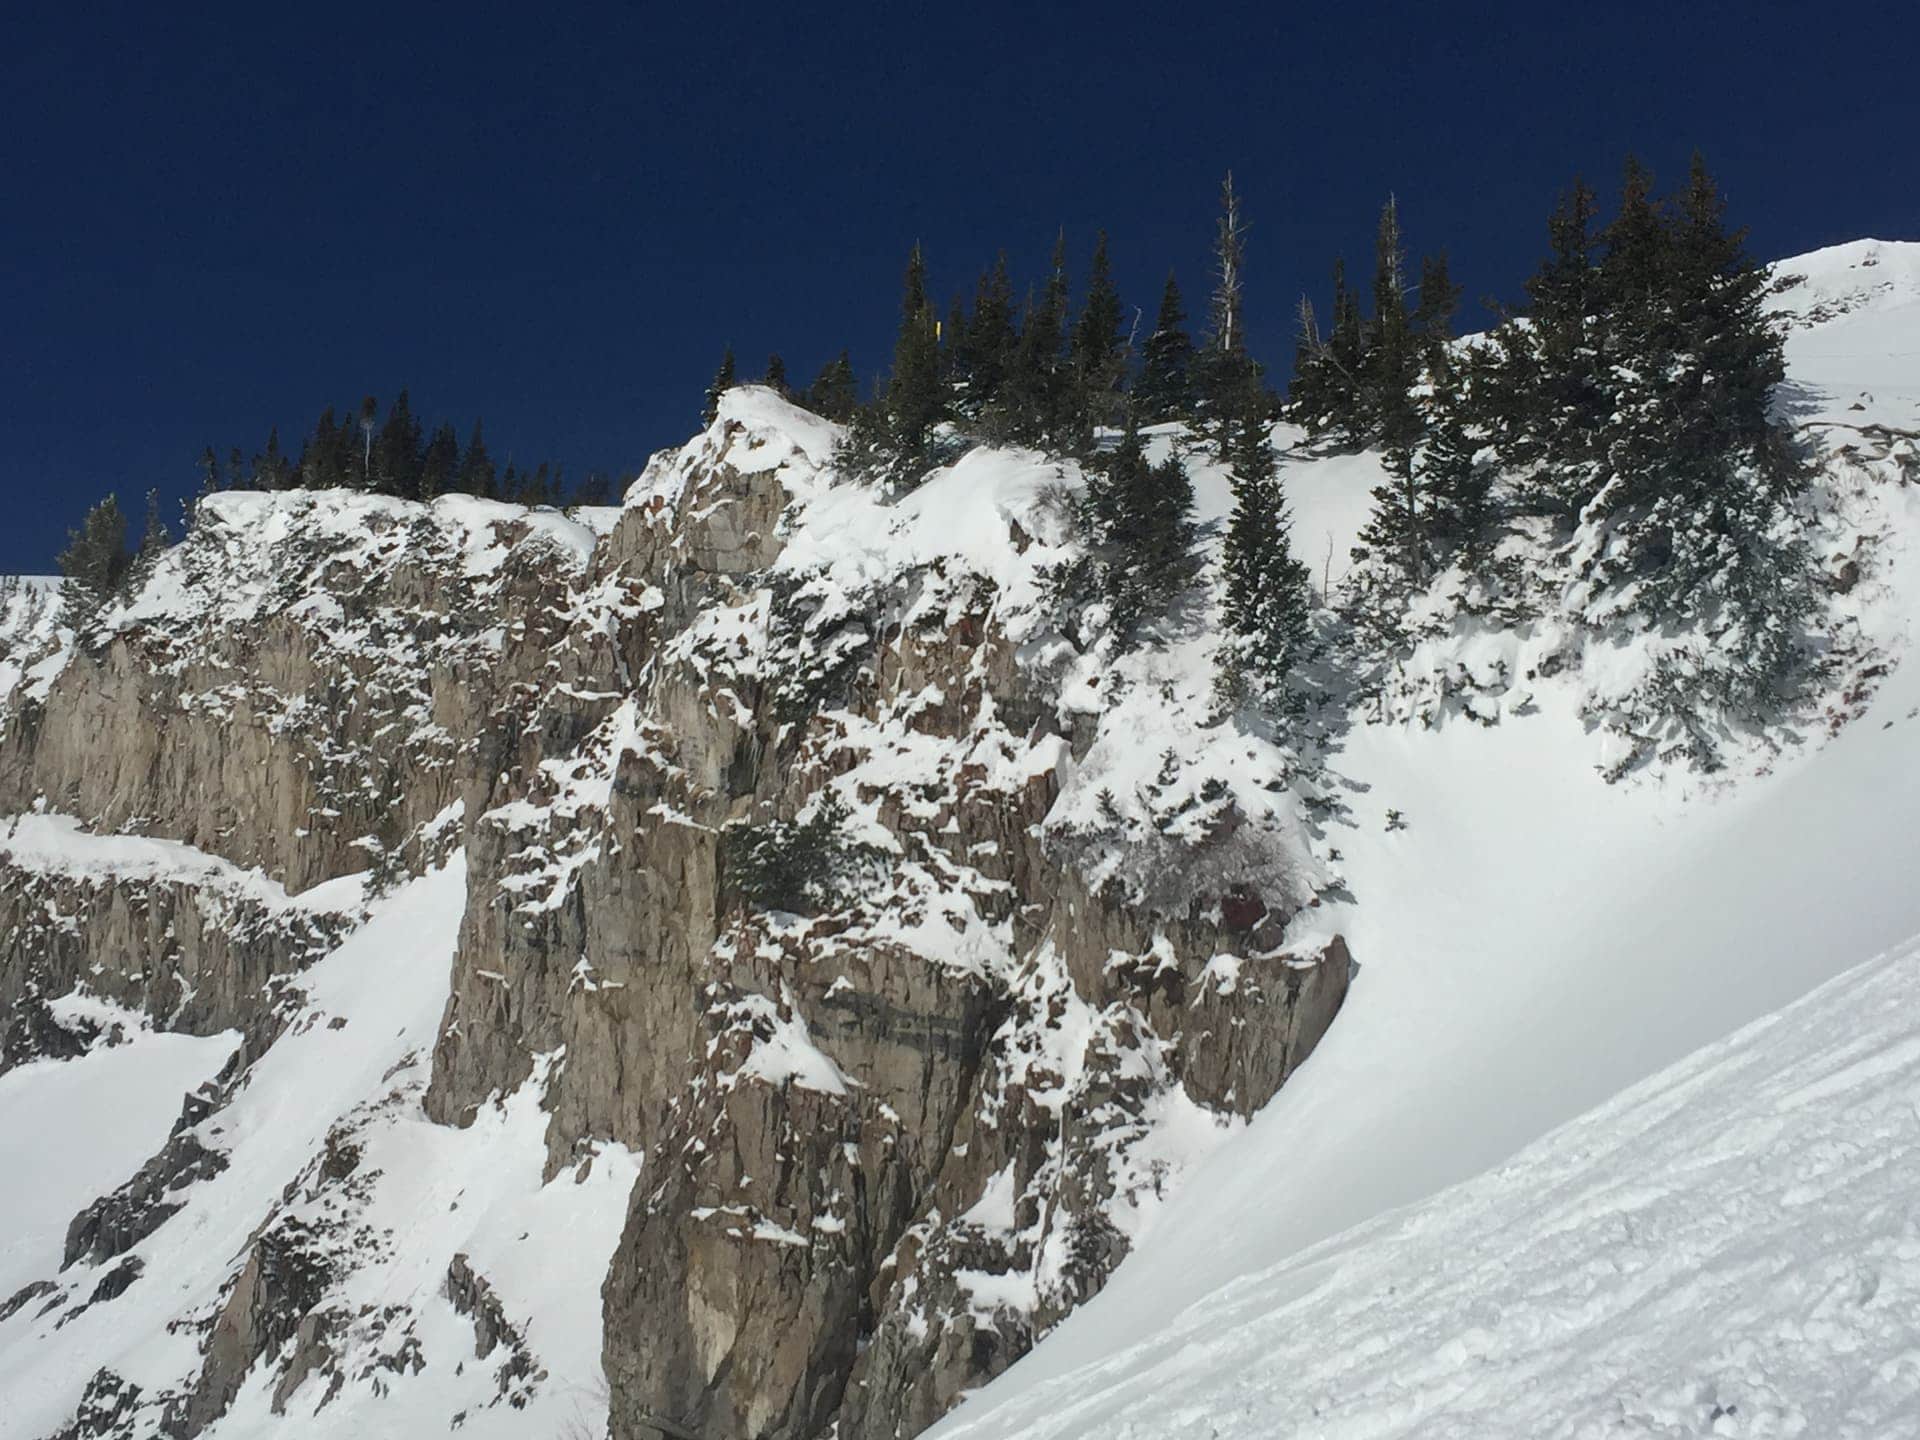 Large cliffs at Snowbird Ski Resort